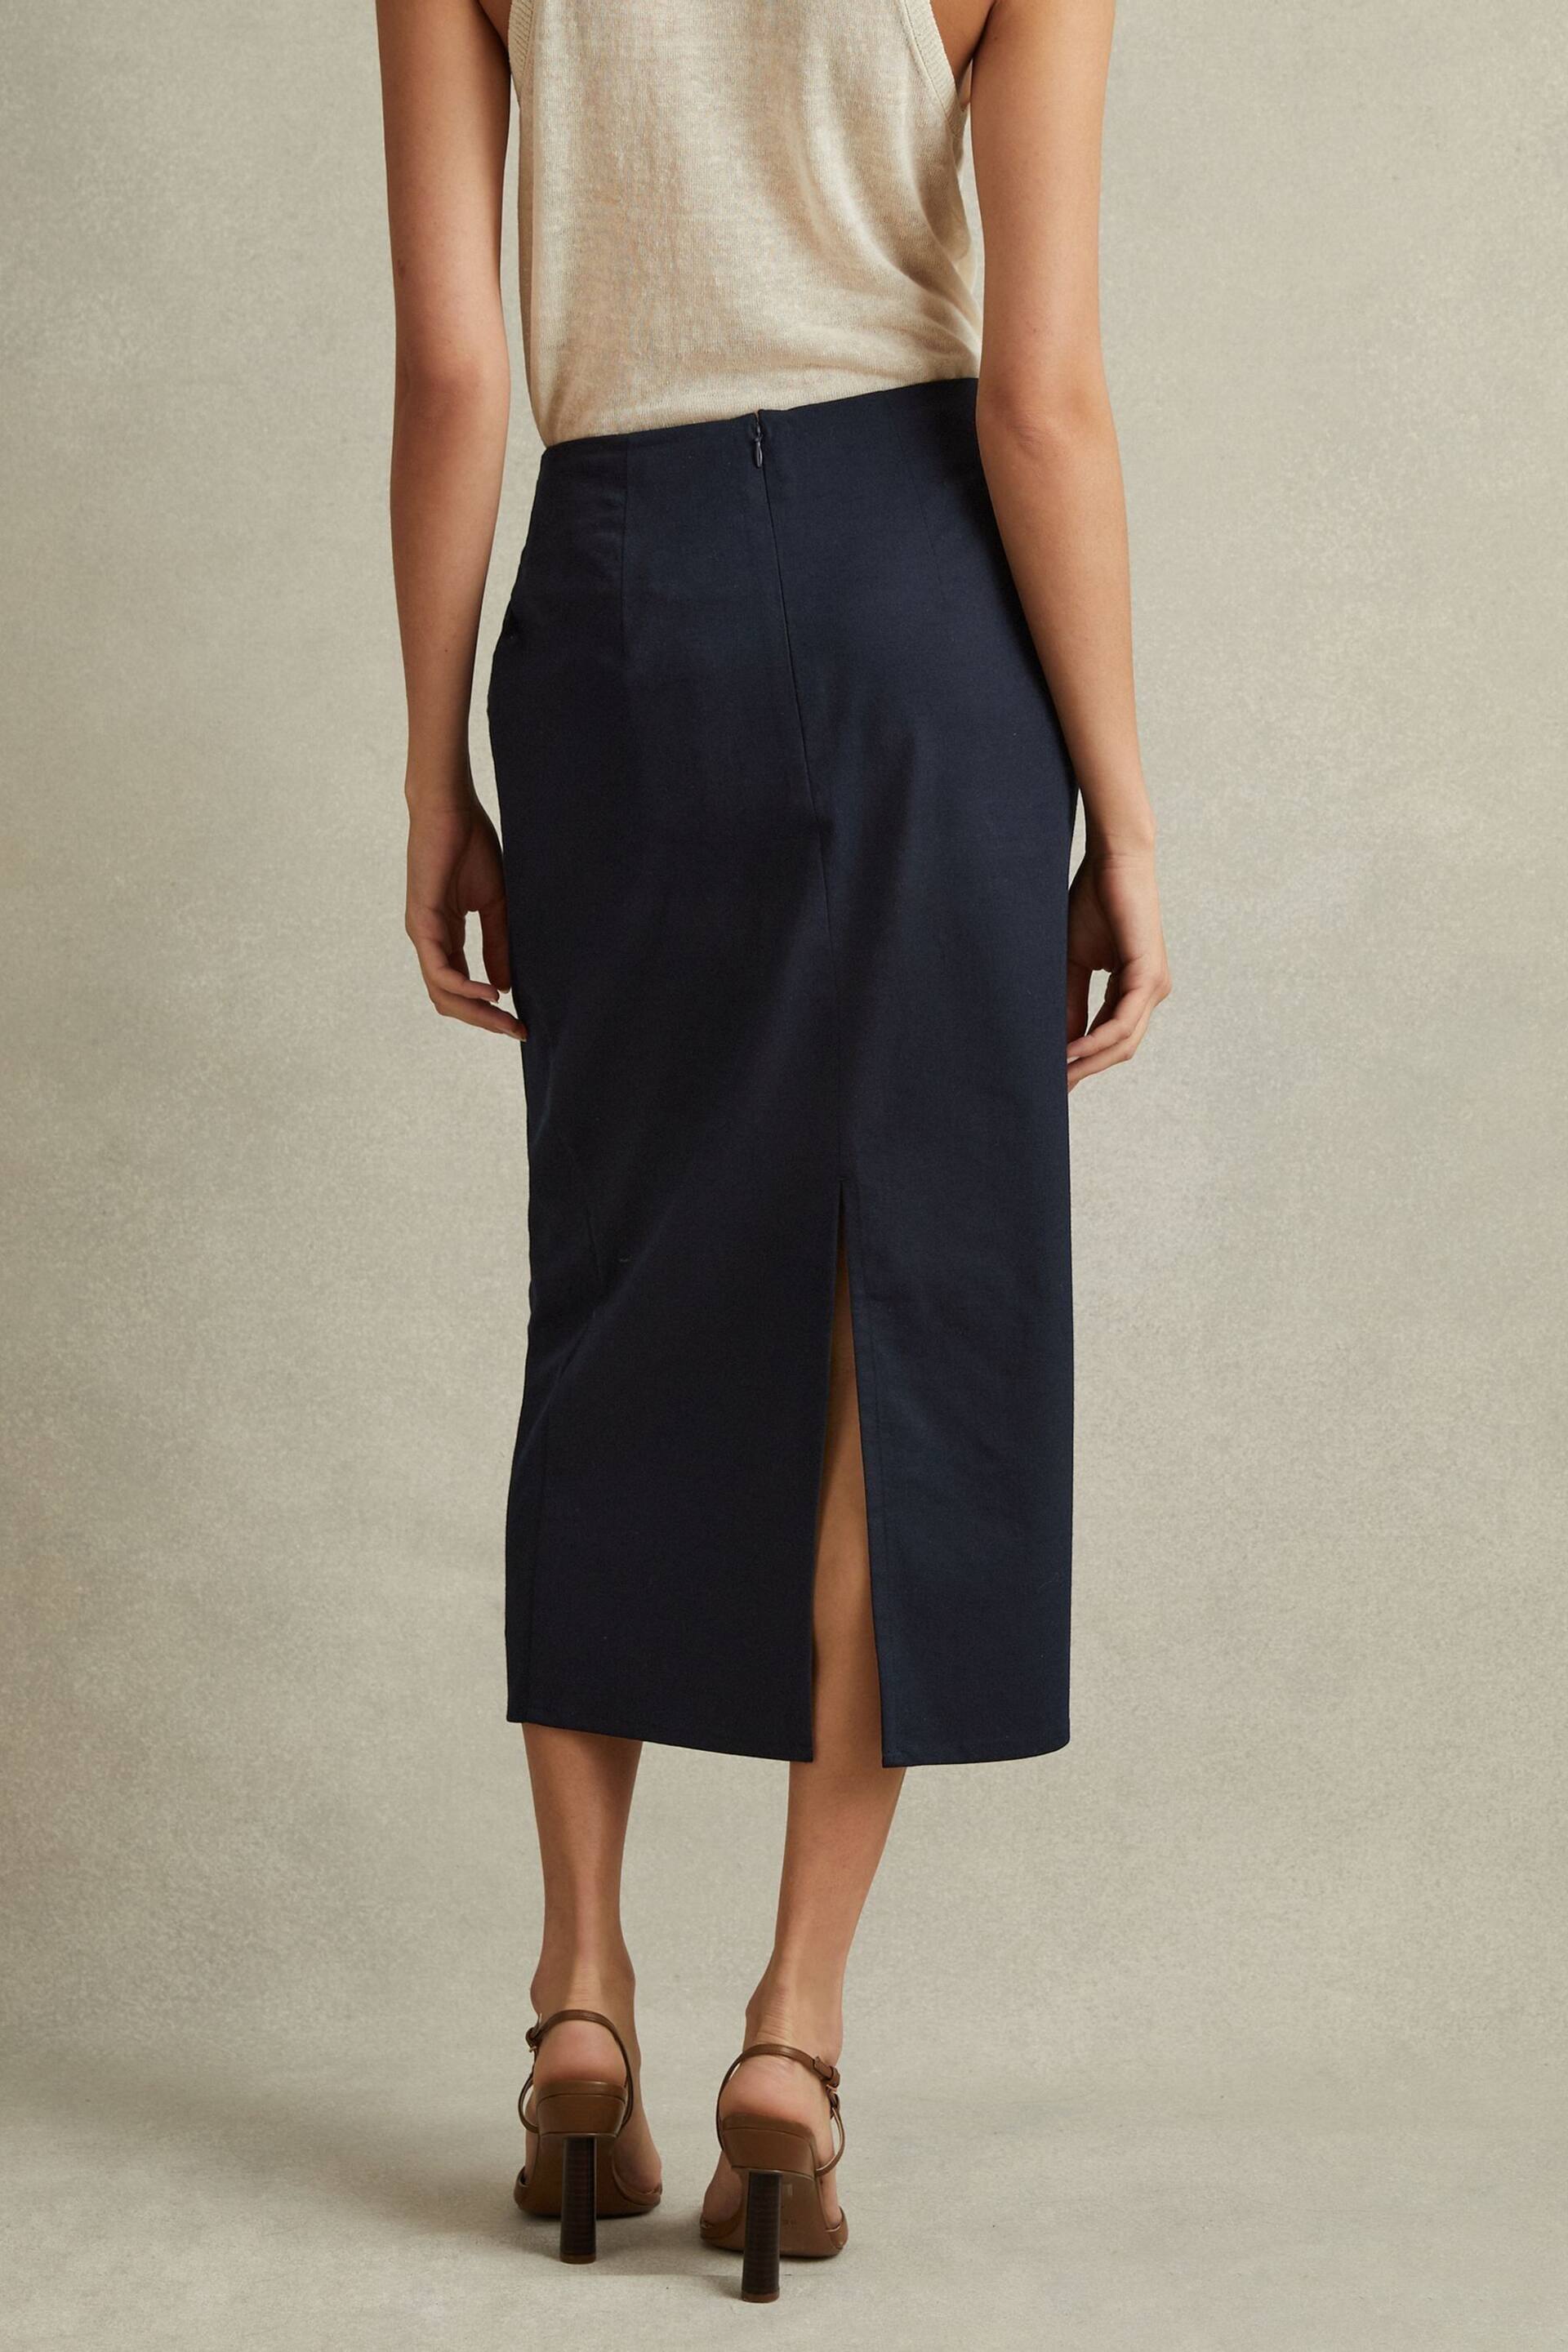 Reiss Navy Nadia Cotton Blend Wrap Front Midi Skirt - Image 4 of 5